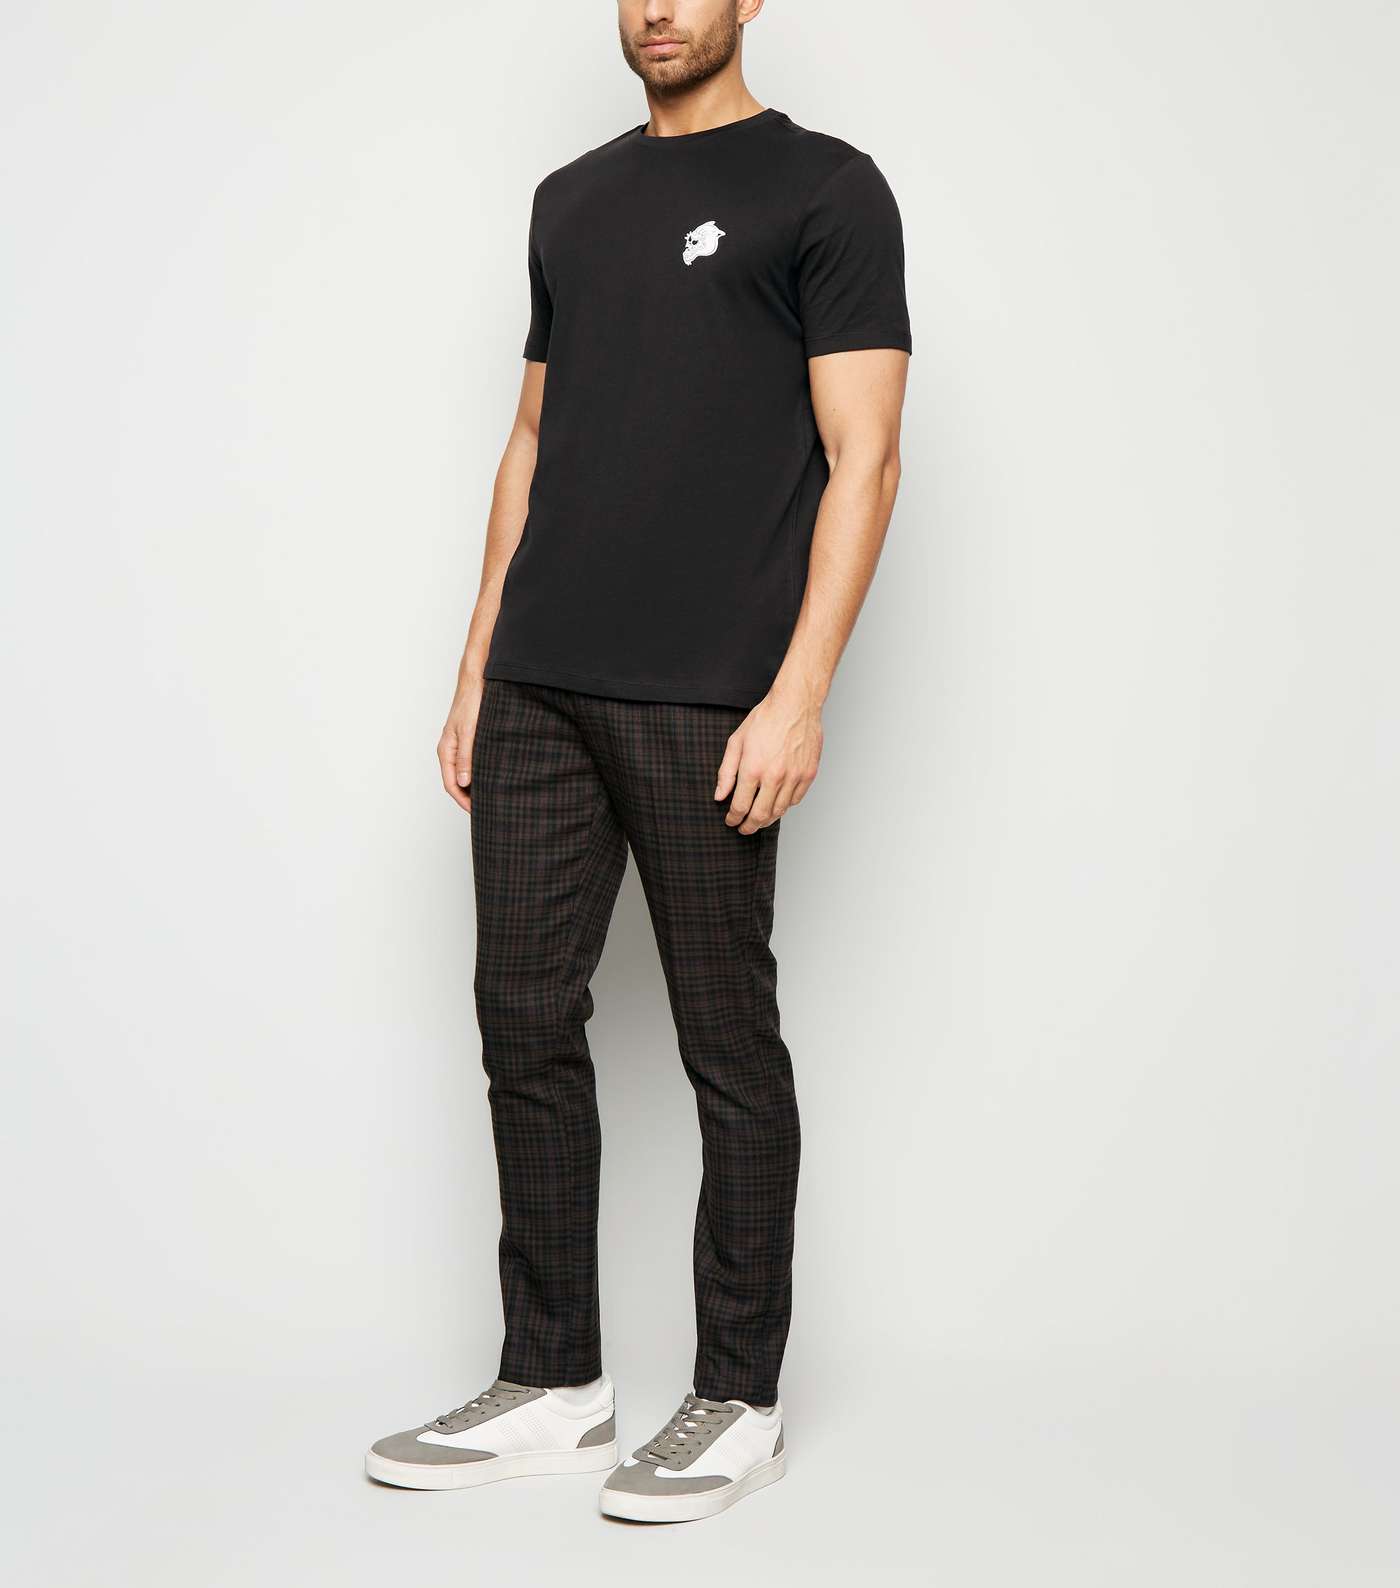 Black Printed Panther Short Sleeve T-Shirt Image 2